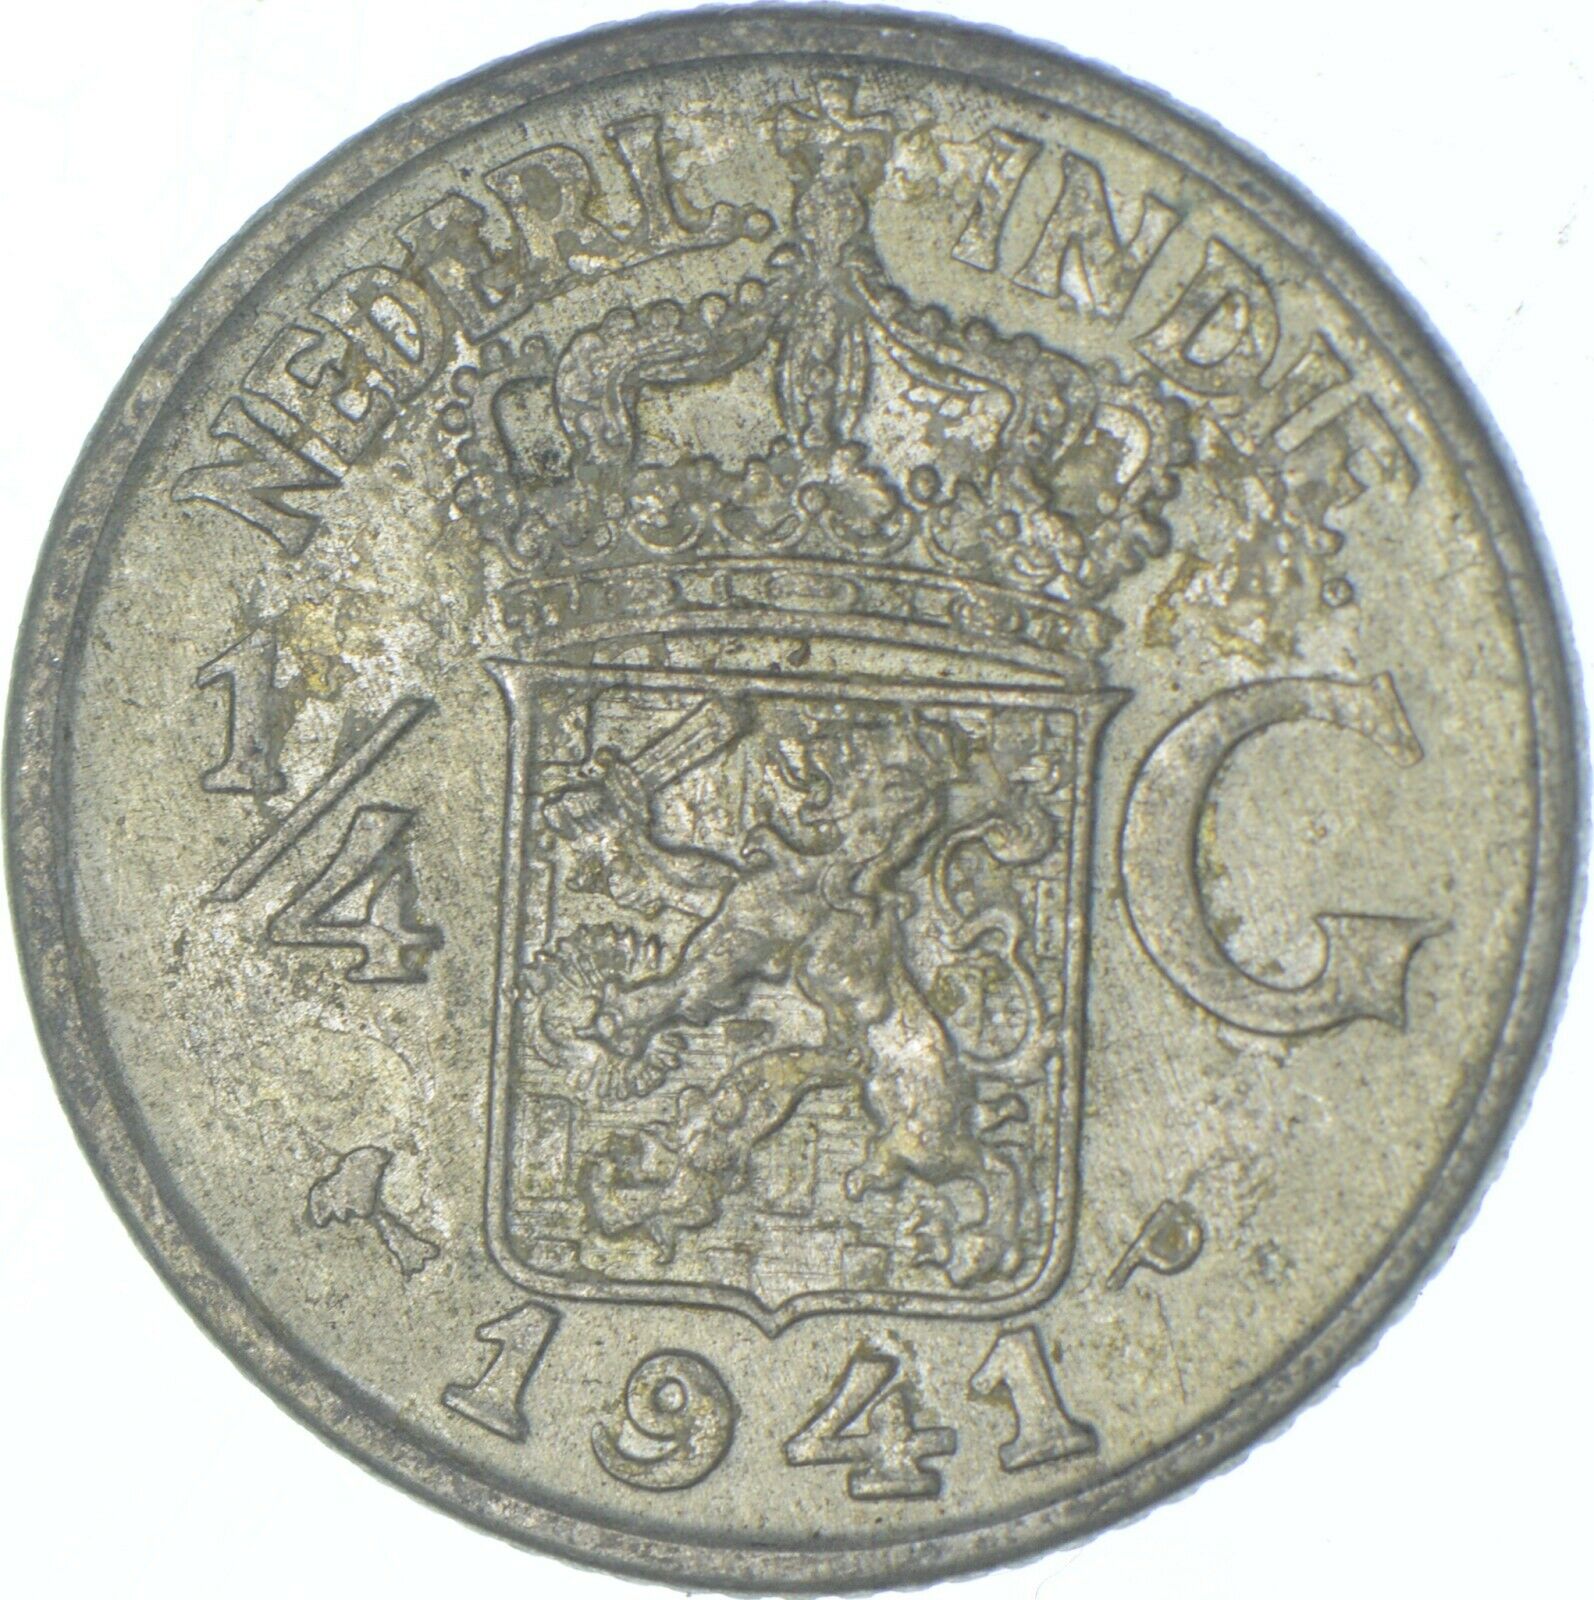 Better Date - 1941 Netherlands East Indies 1/4 Gulden - Silver *723